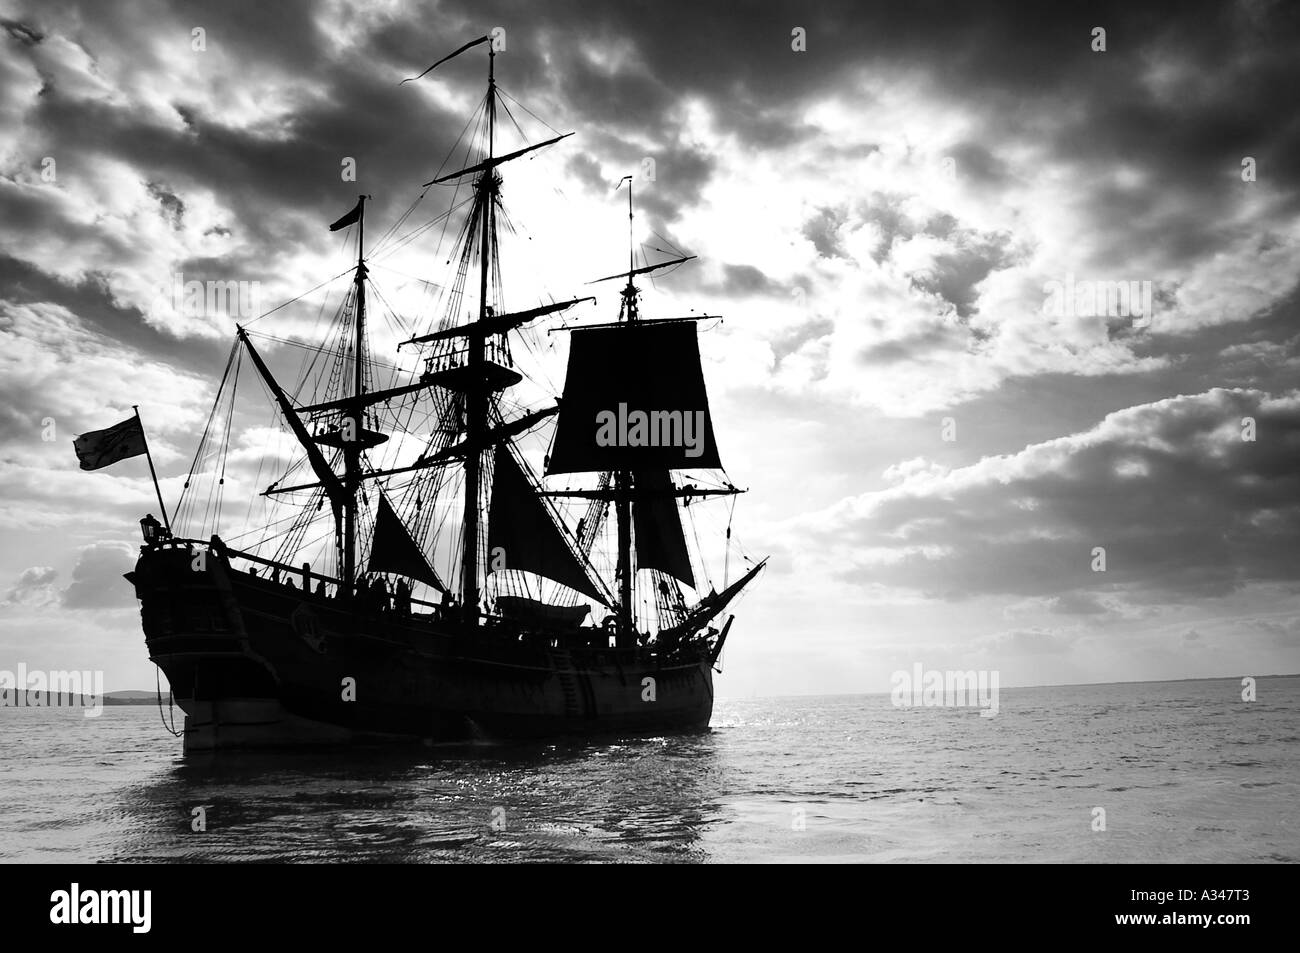 Barca,compadre,Réplica de James Cook's ship, empeño, Solent Isle of Wight Inglaterra enorme atardecer Foto de stock